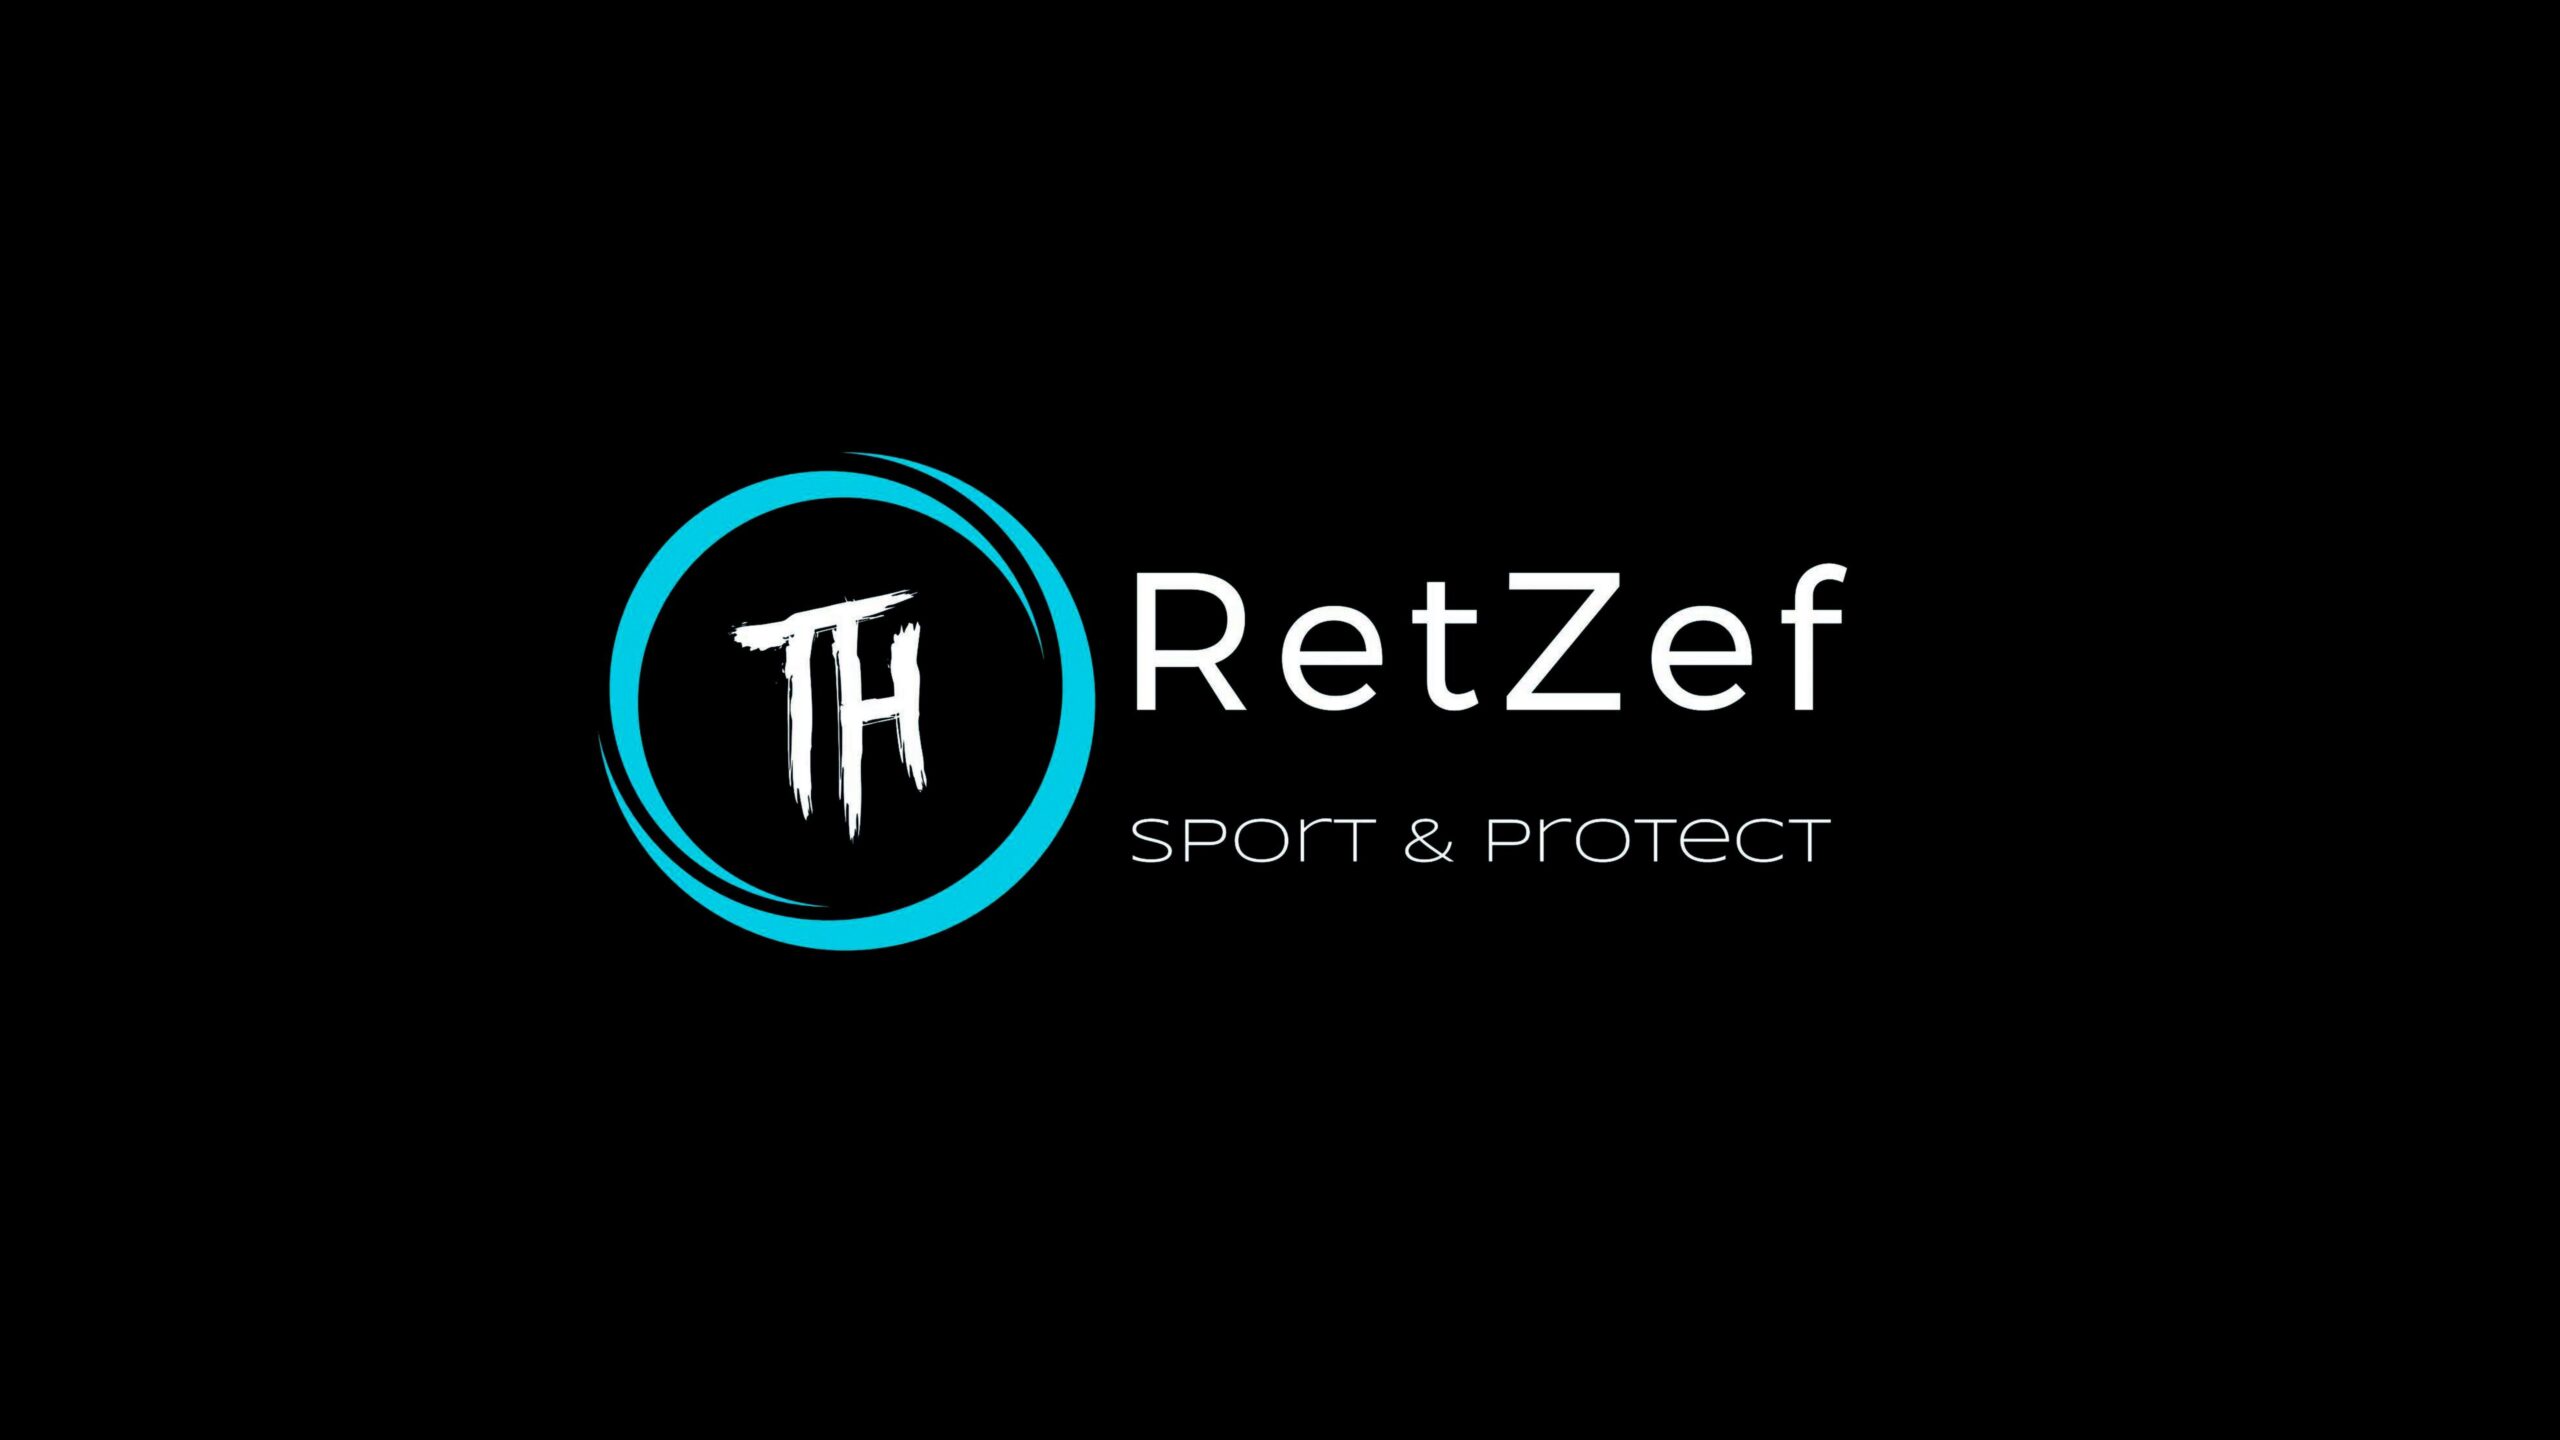 RetZef - Sport & Protect